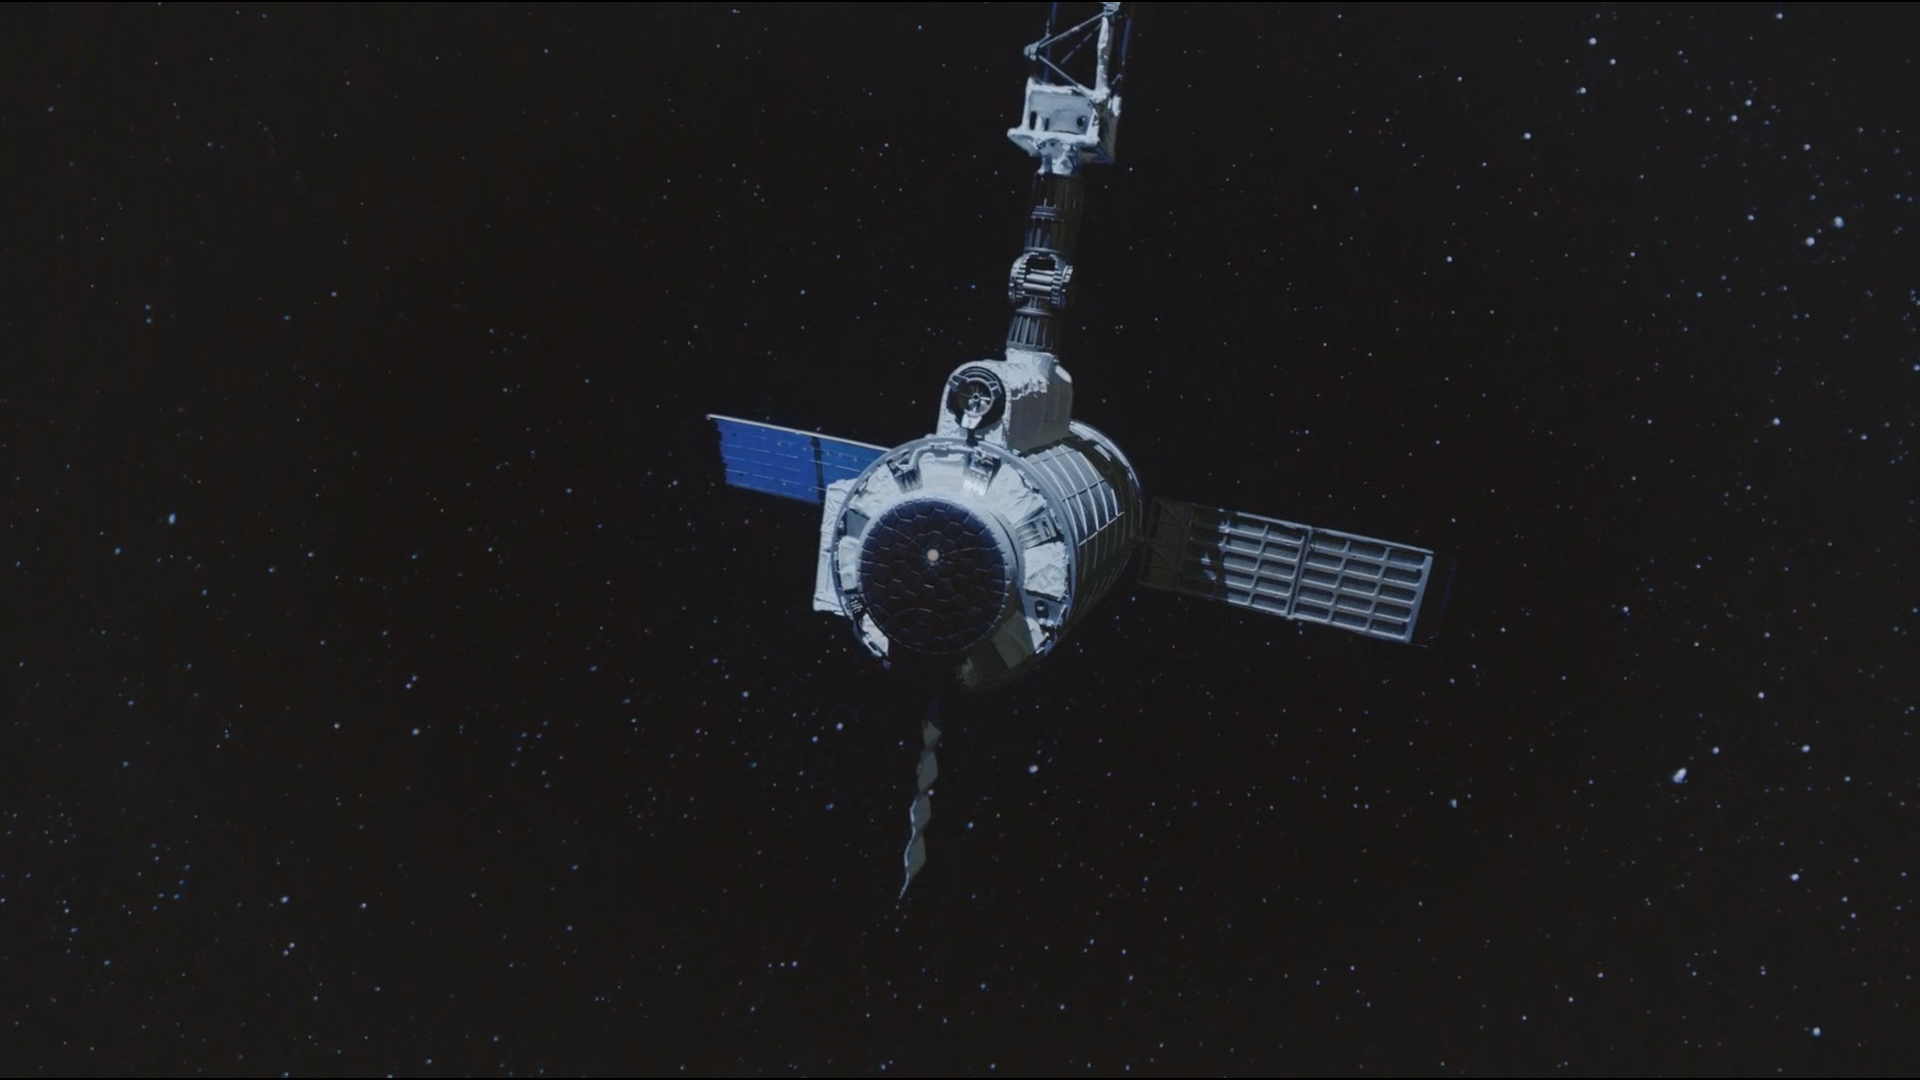 Film Stills Screen Shot Spaceship Satellite Stars Space Adventure Isolation Isolated Rocket Launcher 1920x1080